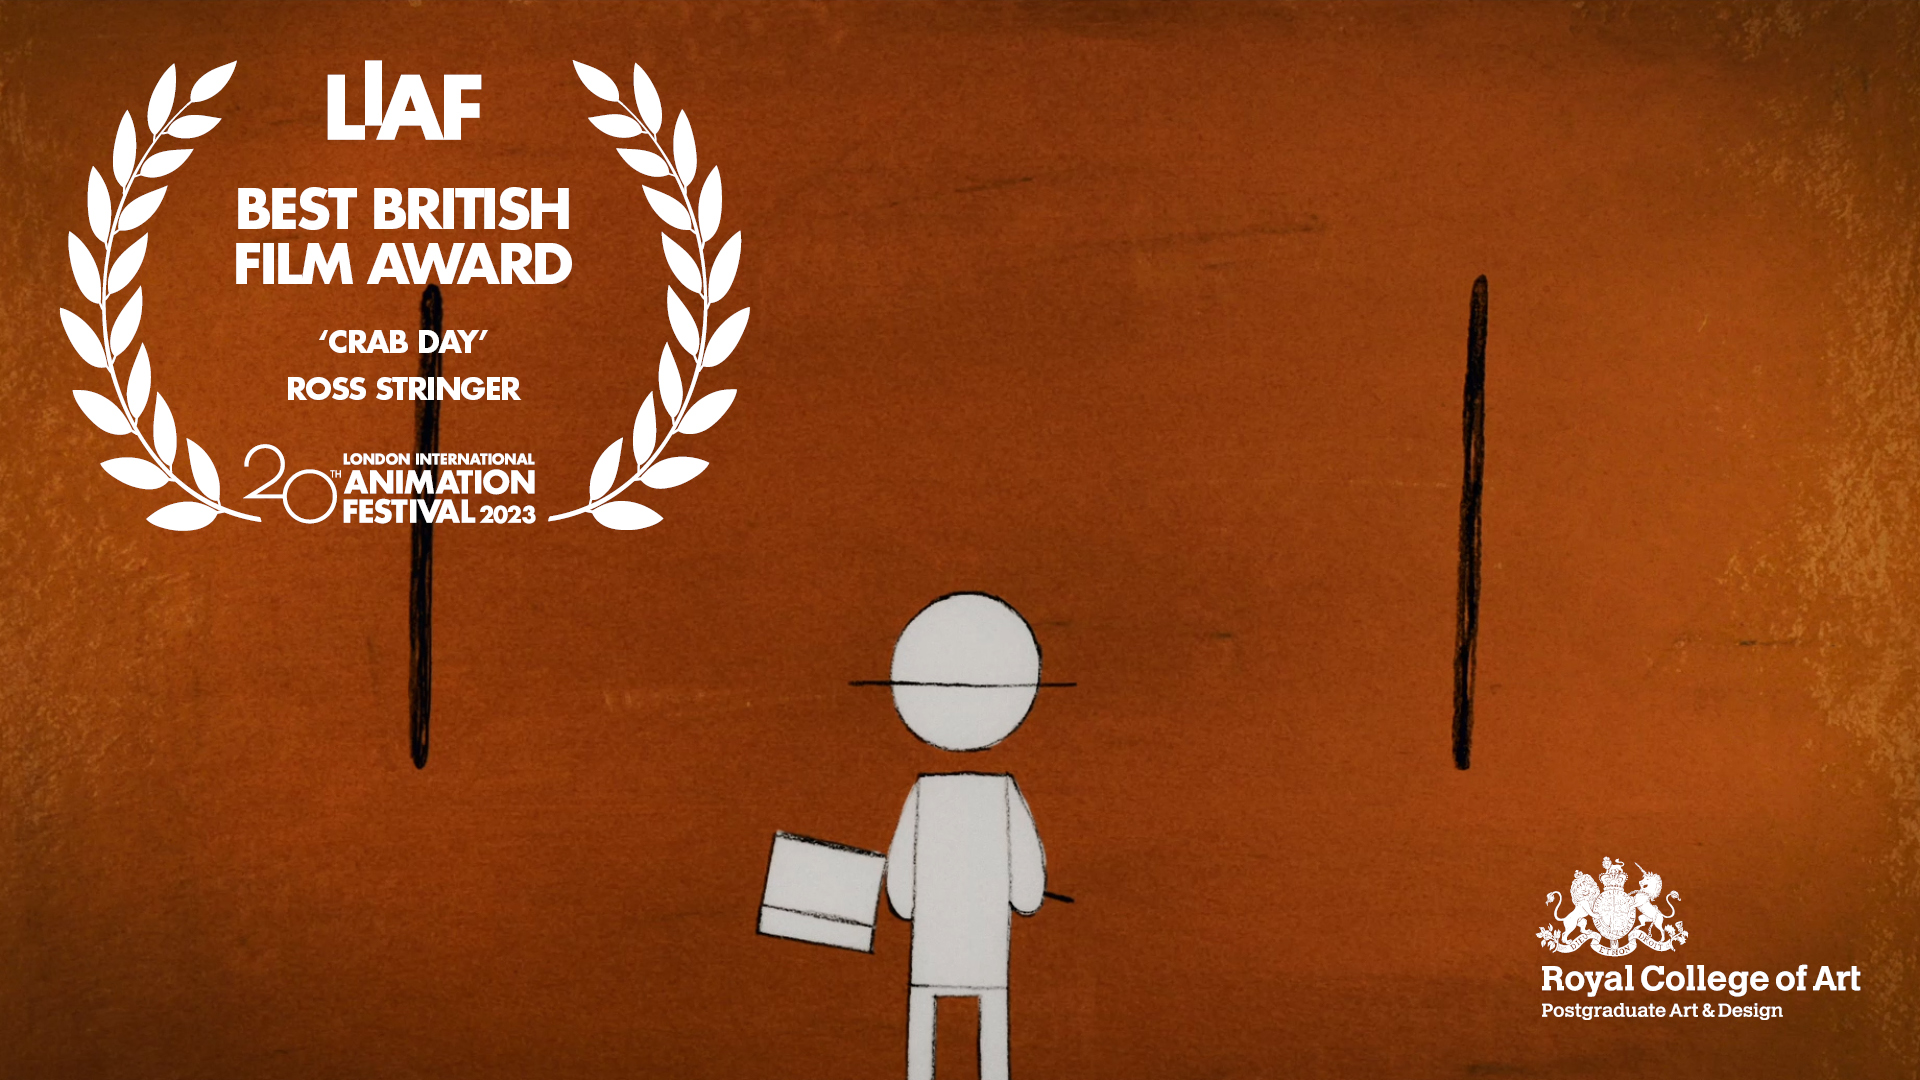 LIAF, London International Animation Festival, Best British Film Award, Crab Day, Ross Stringer